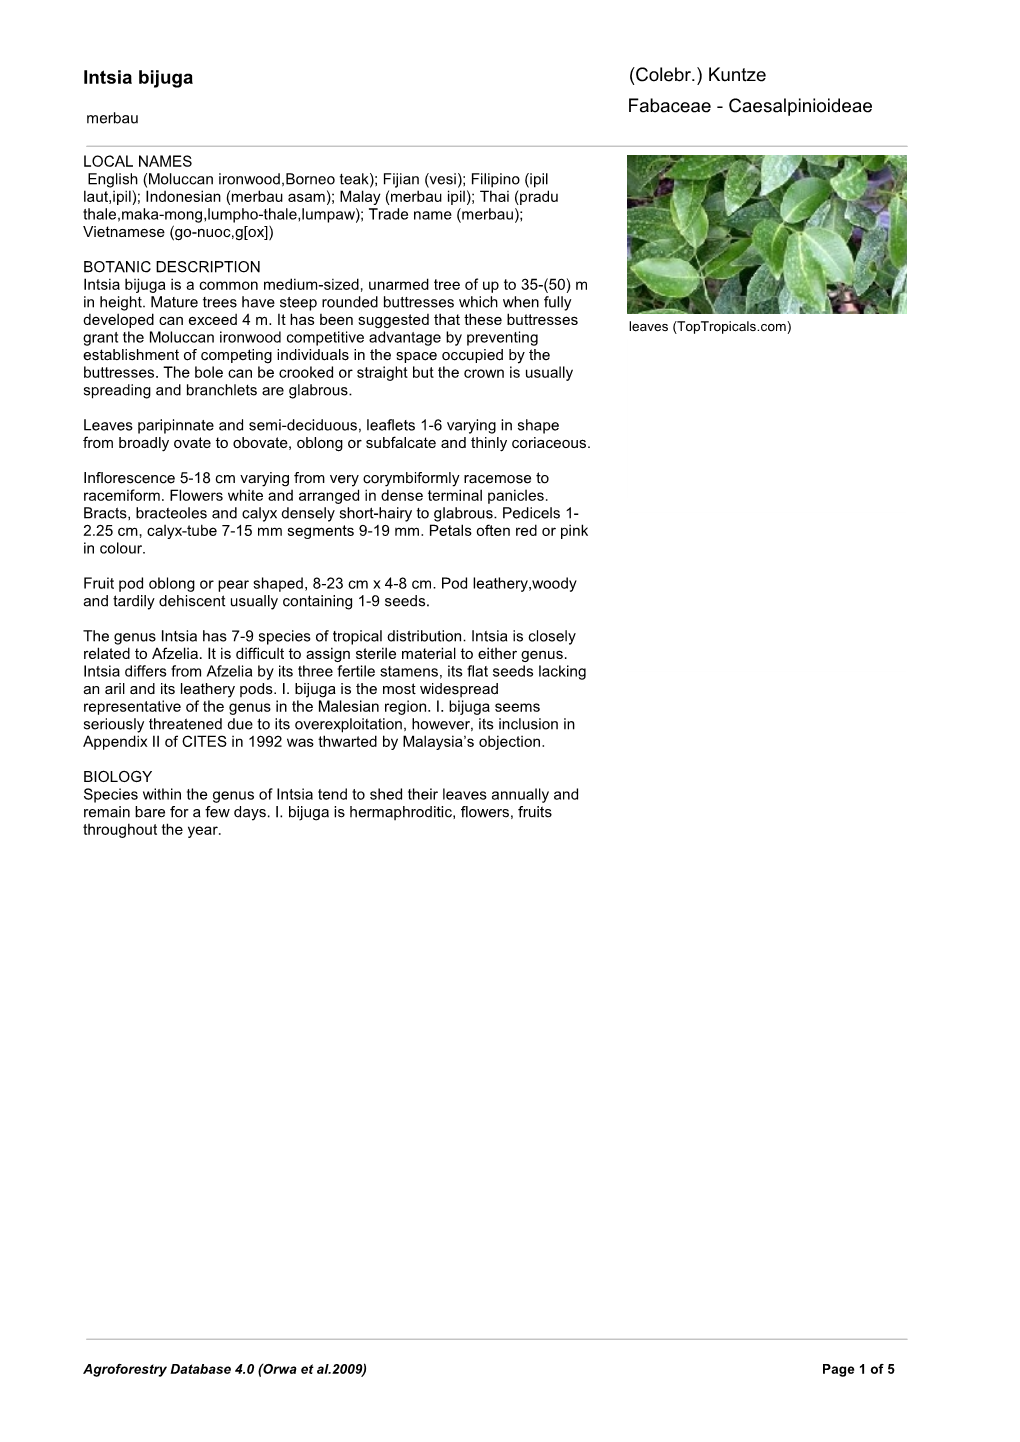 Intsia Bijuga (Colebr.) Kuntze Fabaceae - Caesalpinioideae Merbau